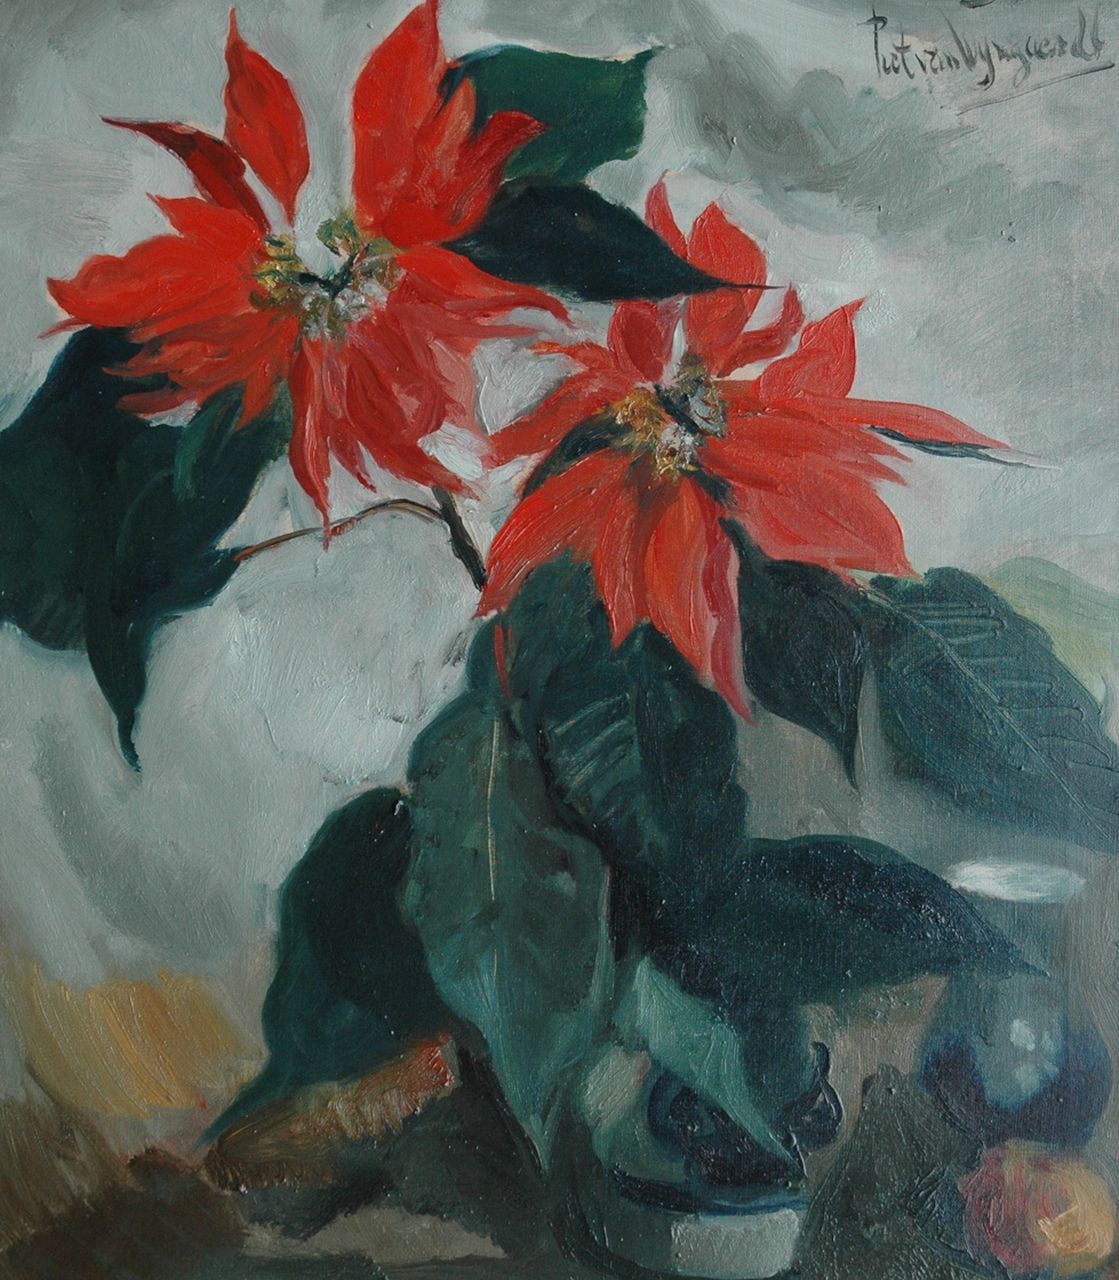 Wijngaerdt P.T. van | Petrus Theodorus 'Piet' van Wijngaerdt, Christmas flowers and rennet apples, Öl auf Leinwand 80,1 x 70,6 cm, signed u.r.